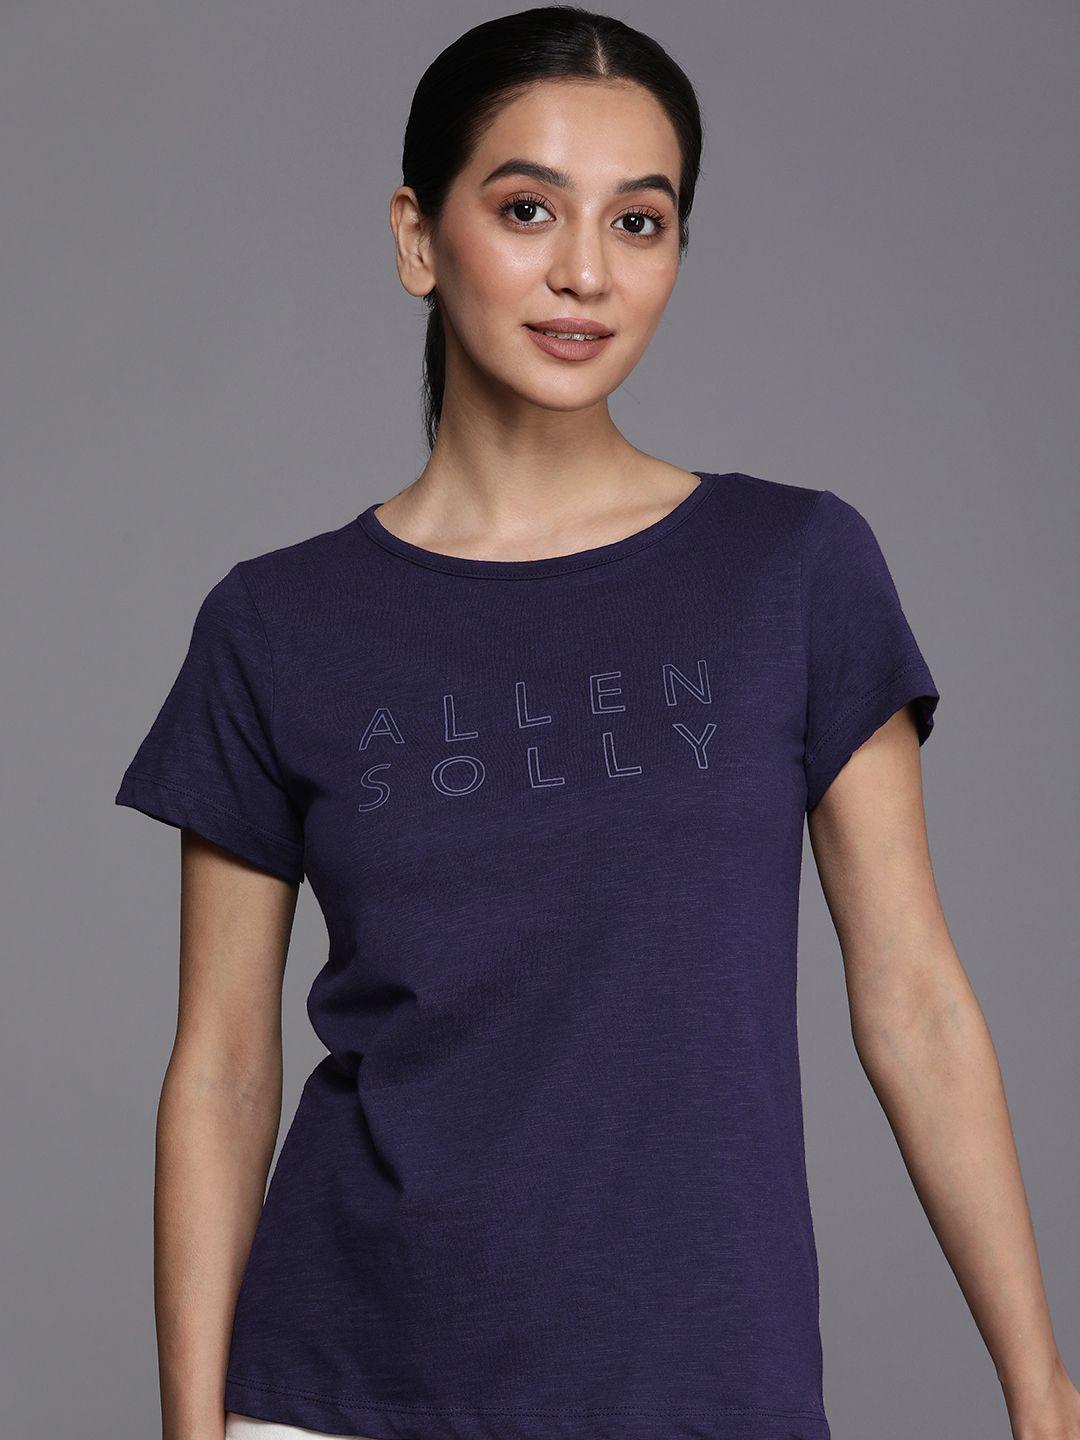 allen solly woman brand logo pure cotton applique t-shirt